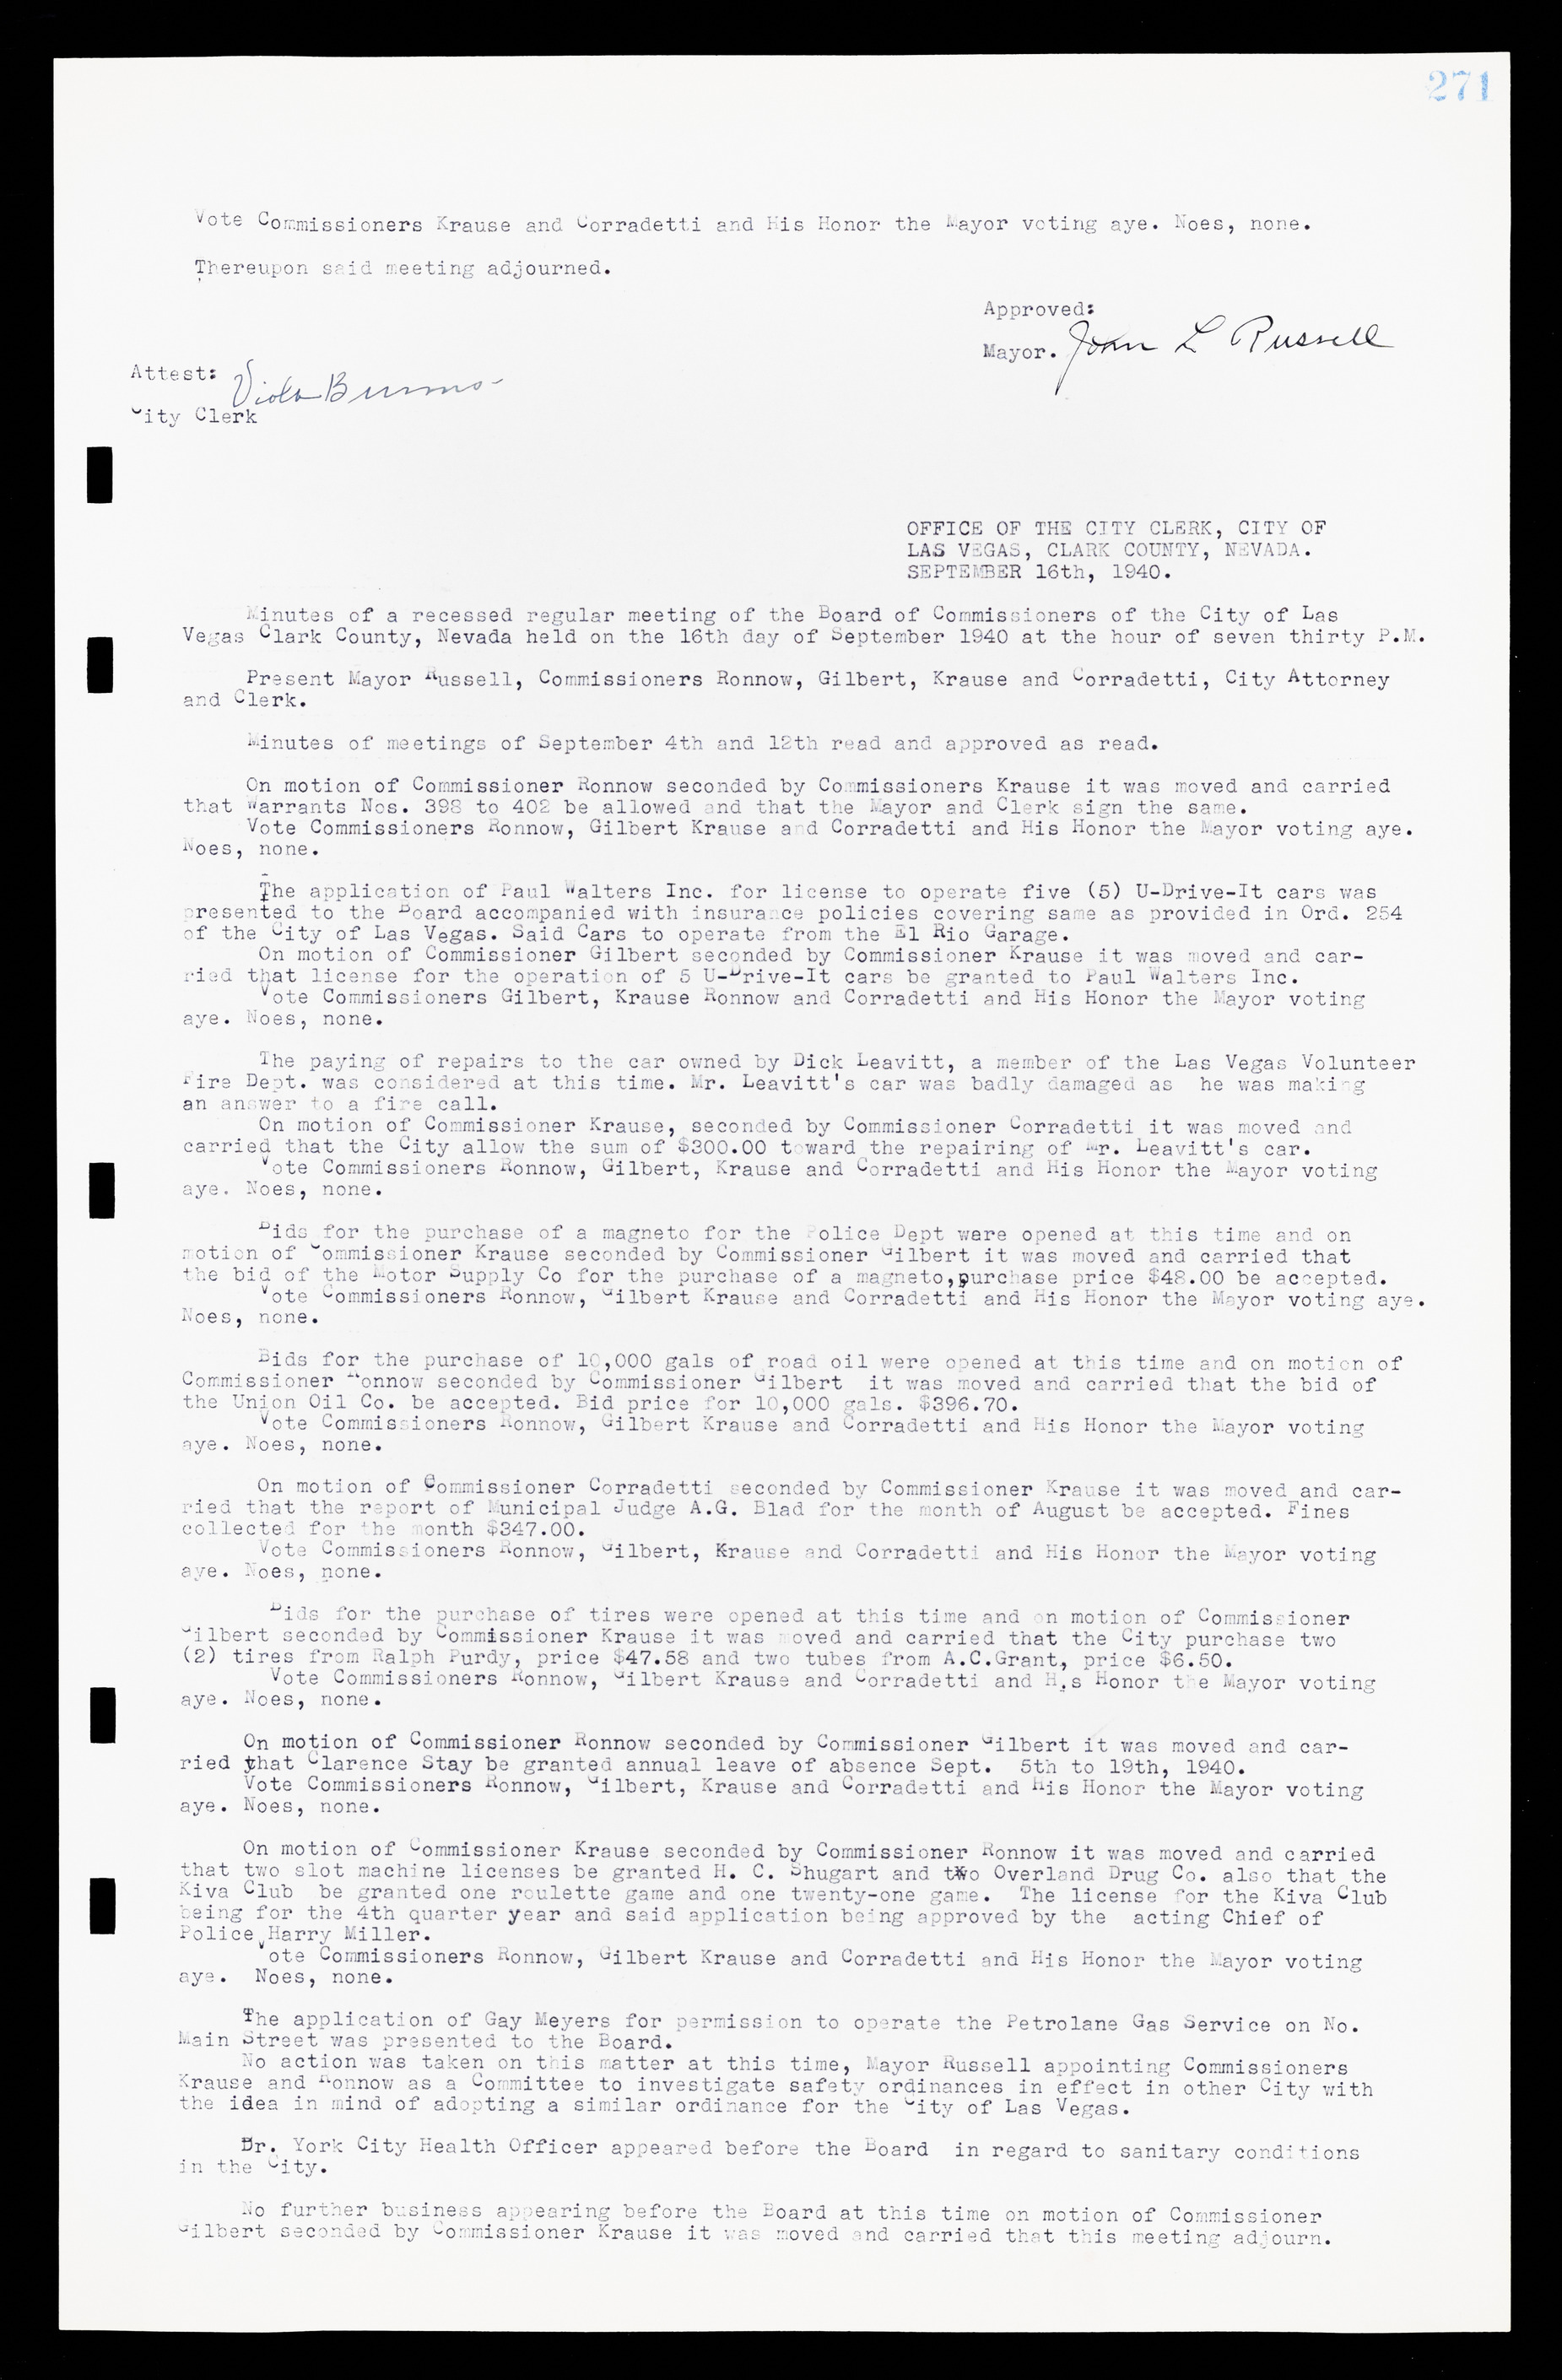 Las Vegas City Commission Minutes, February 17, 1937 to August 4, 1942, lvc000004-293